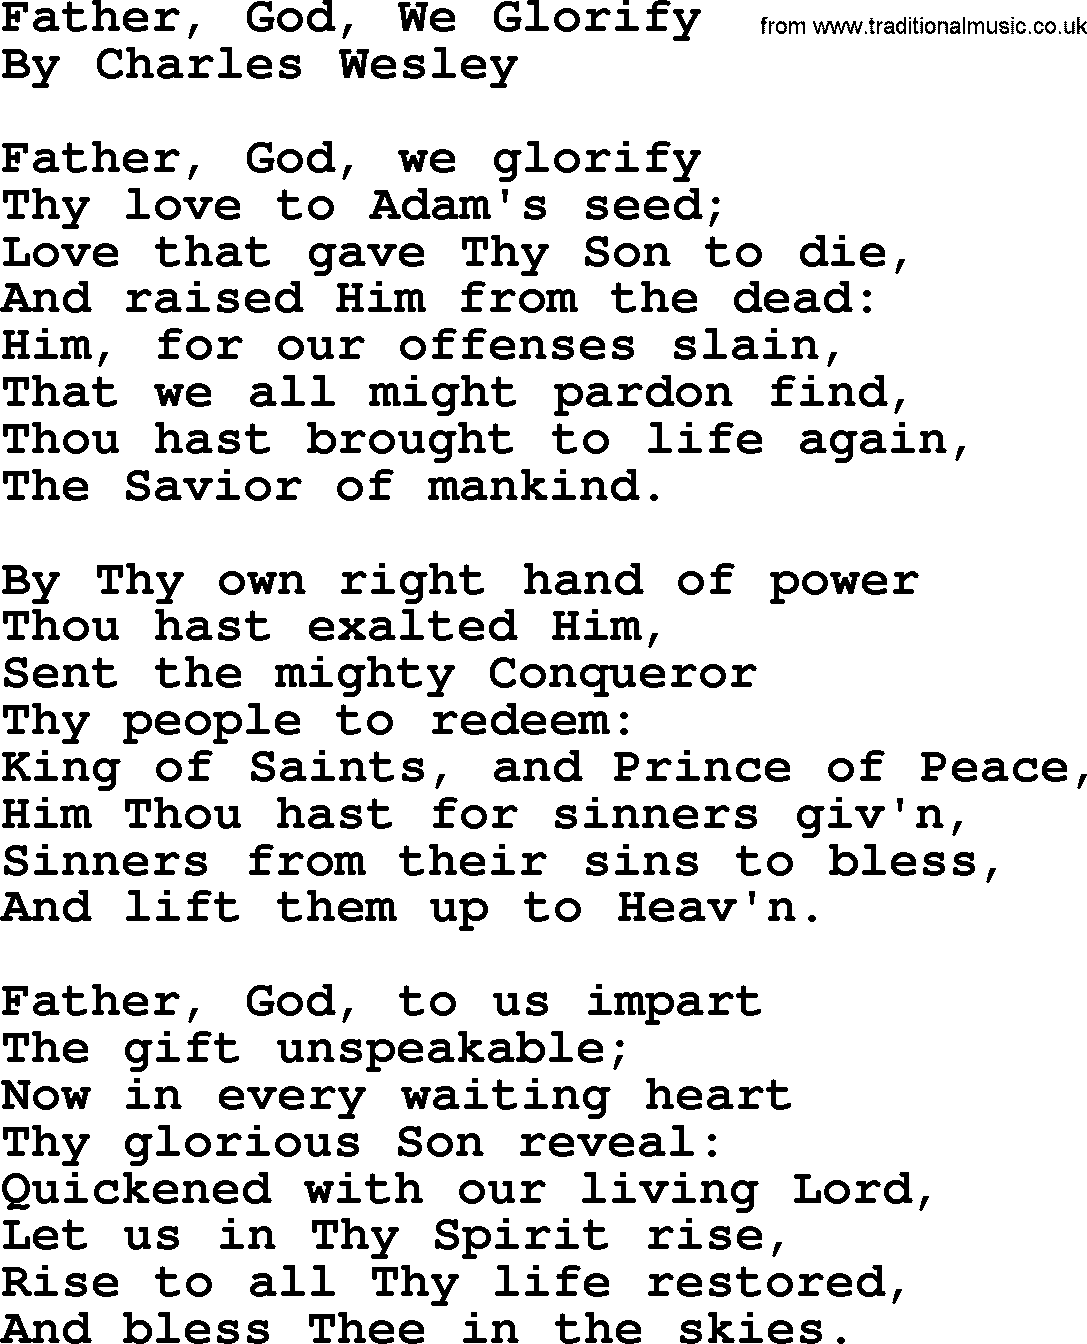 Charles Wesley hymn: Father, God, We Glorify, lyrics